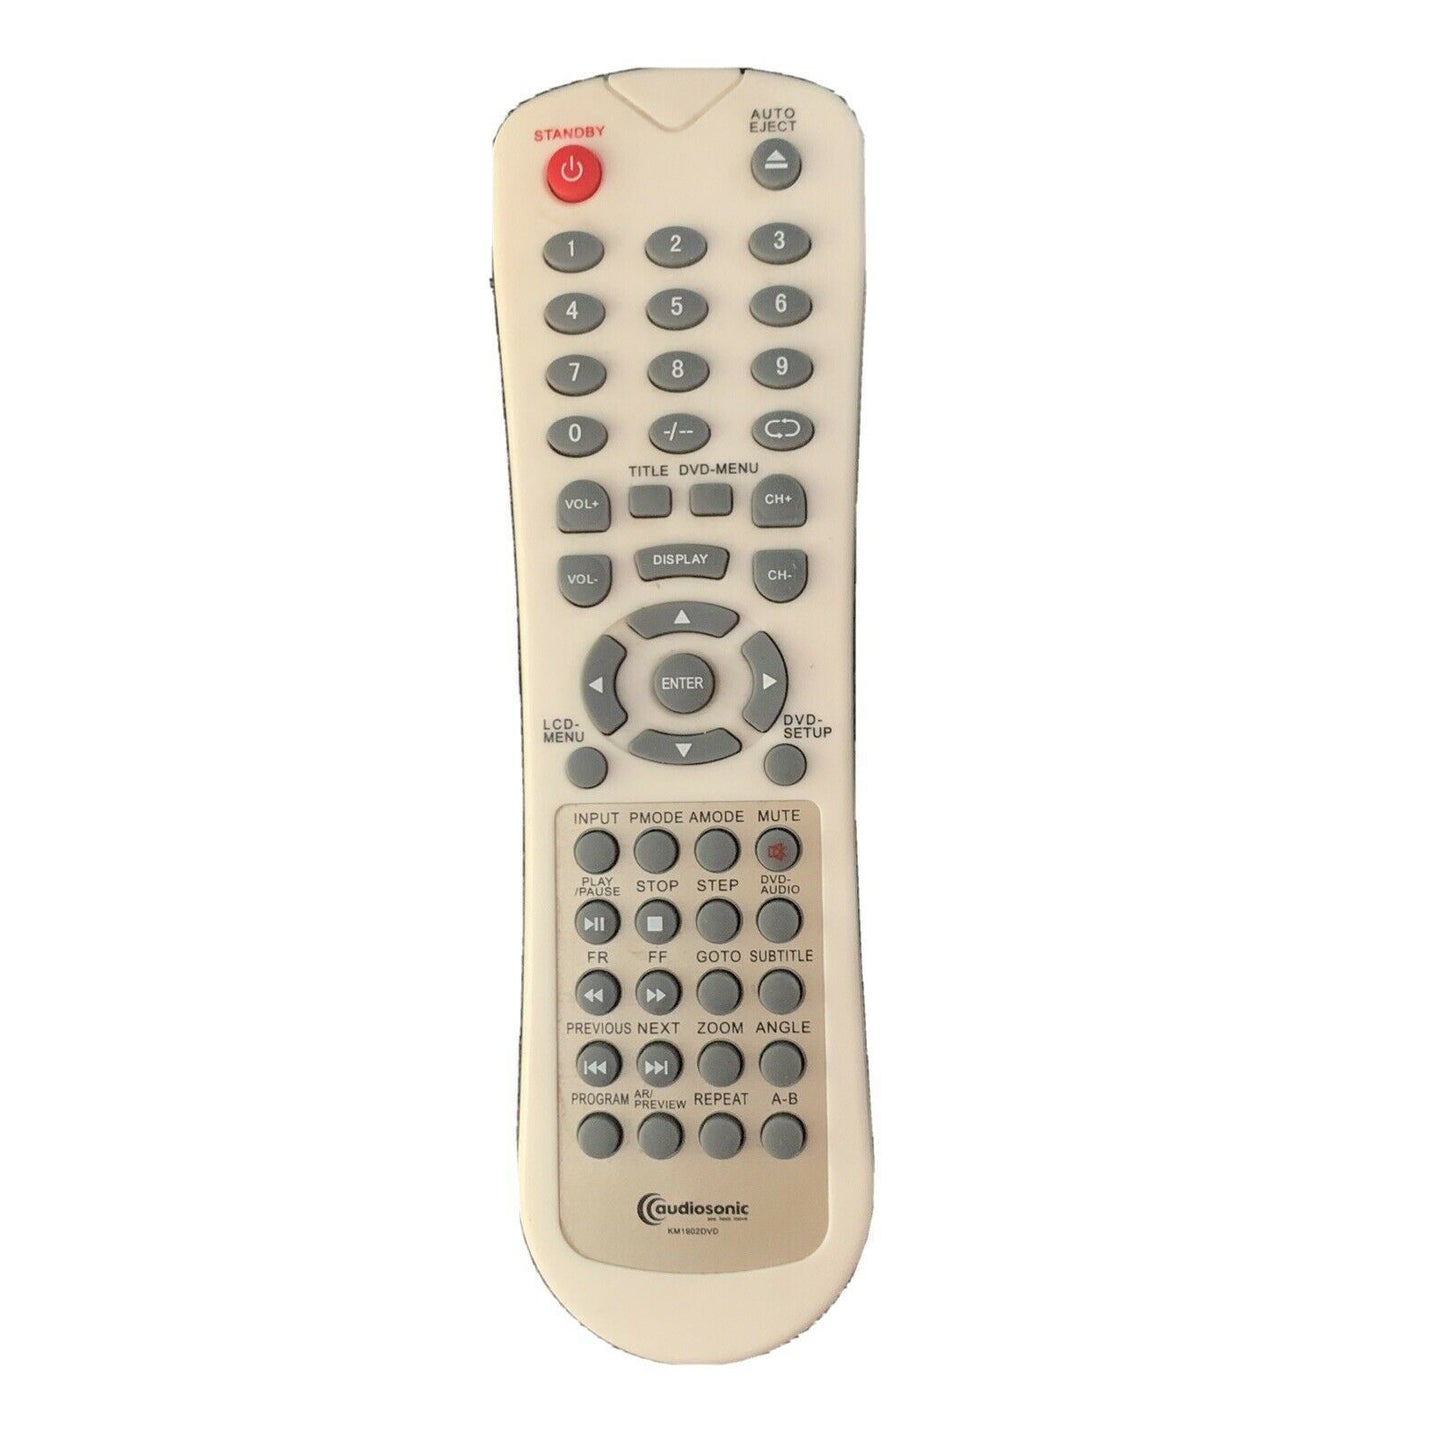 Genuine Audiosonic KM1902DVD Remote Control For DVD Player